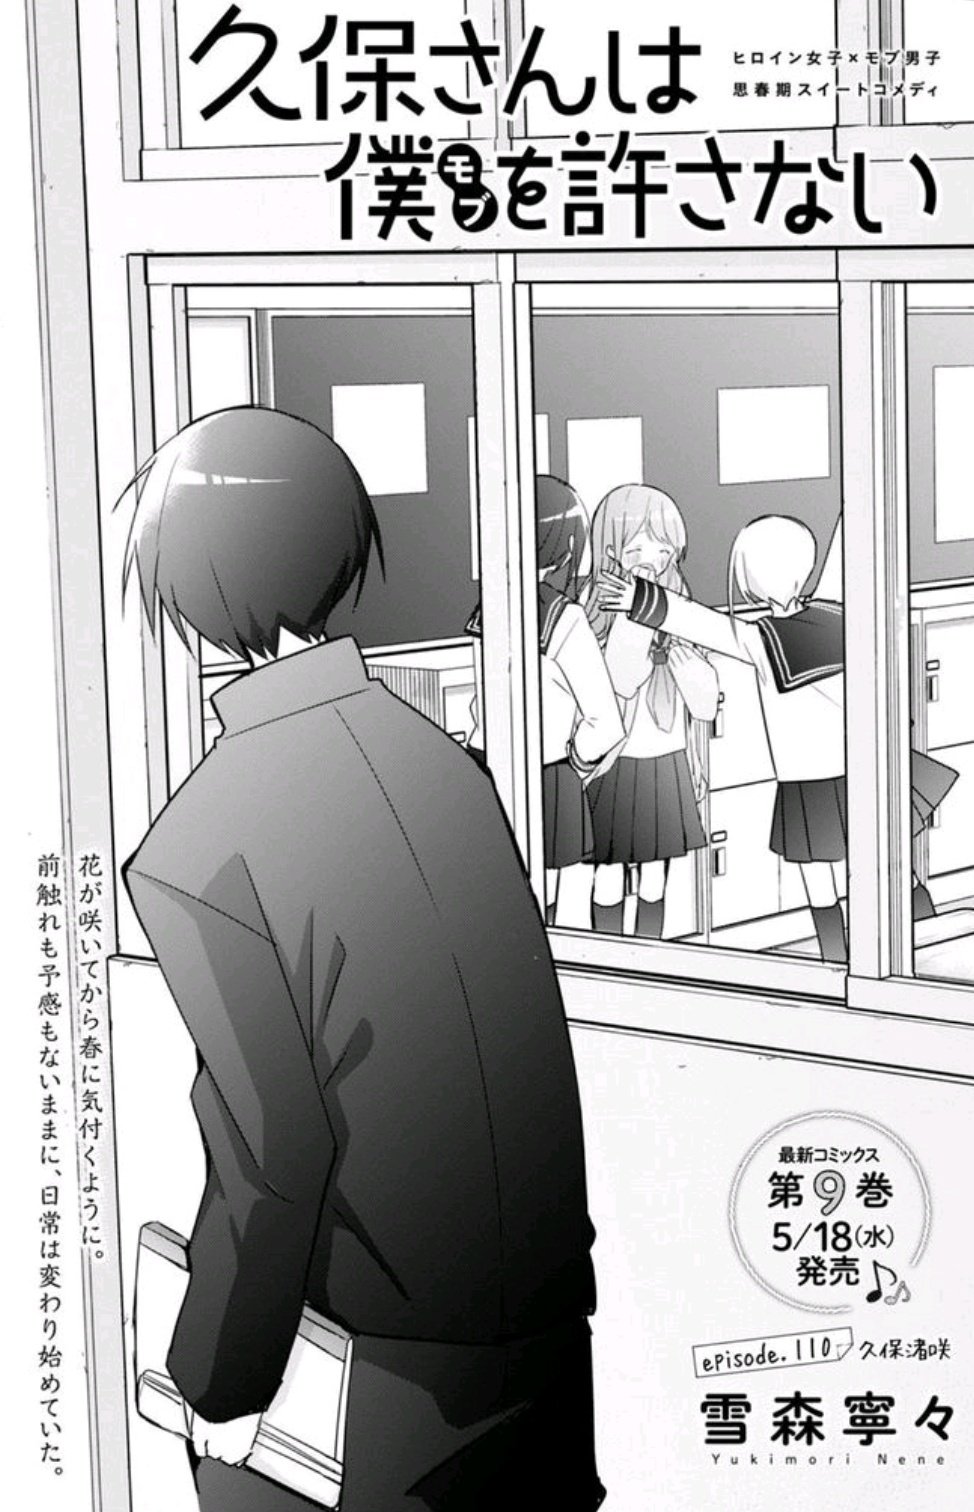 Kubo Won't Let Me Be Invisible, Chapter 57 - Kubo Won't Let Me Be Invisible  Manga Online